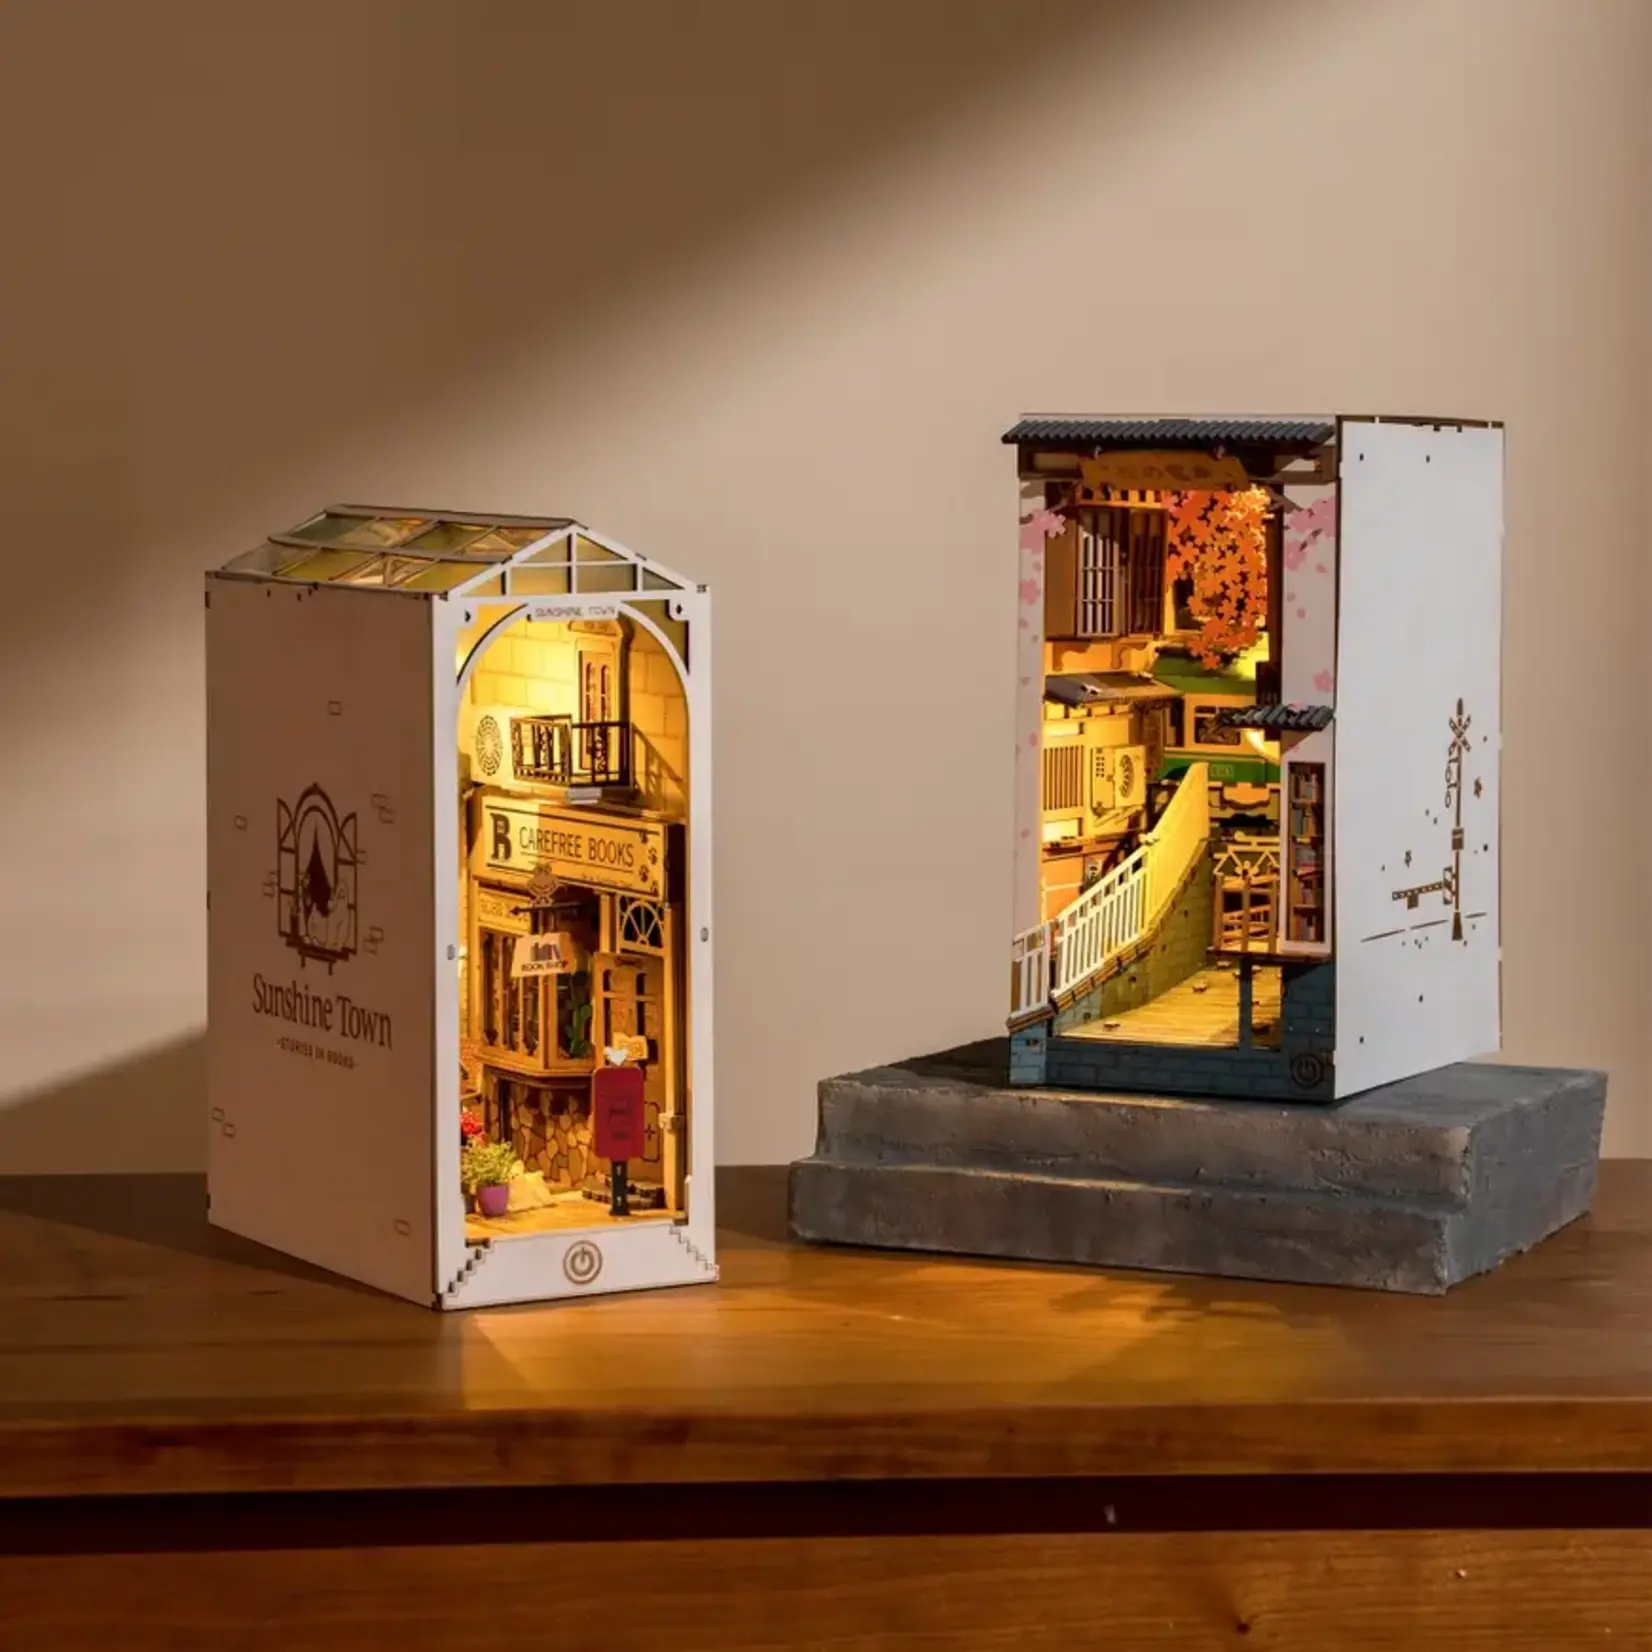 TGB02, DIY Miniature House Book Nook Kit: Sunshine Town